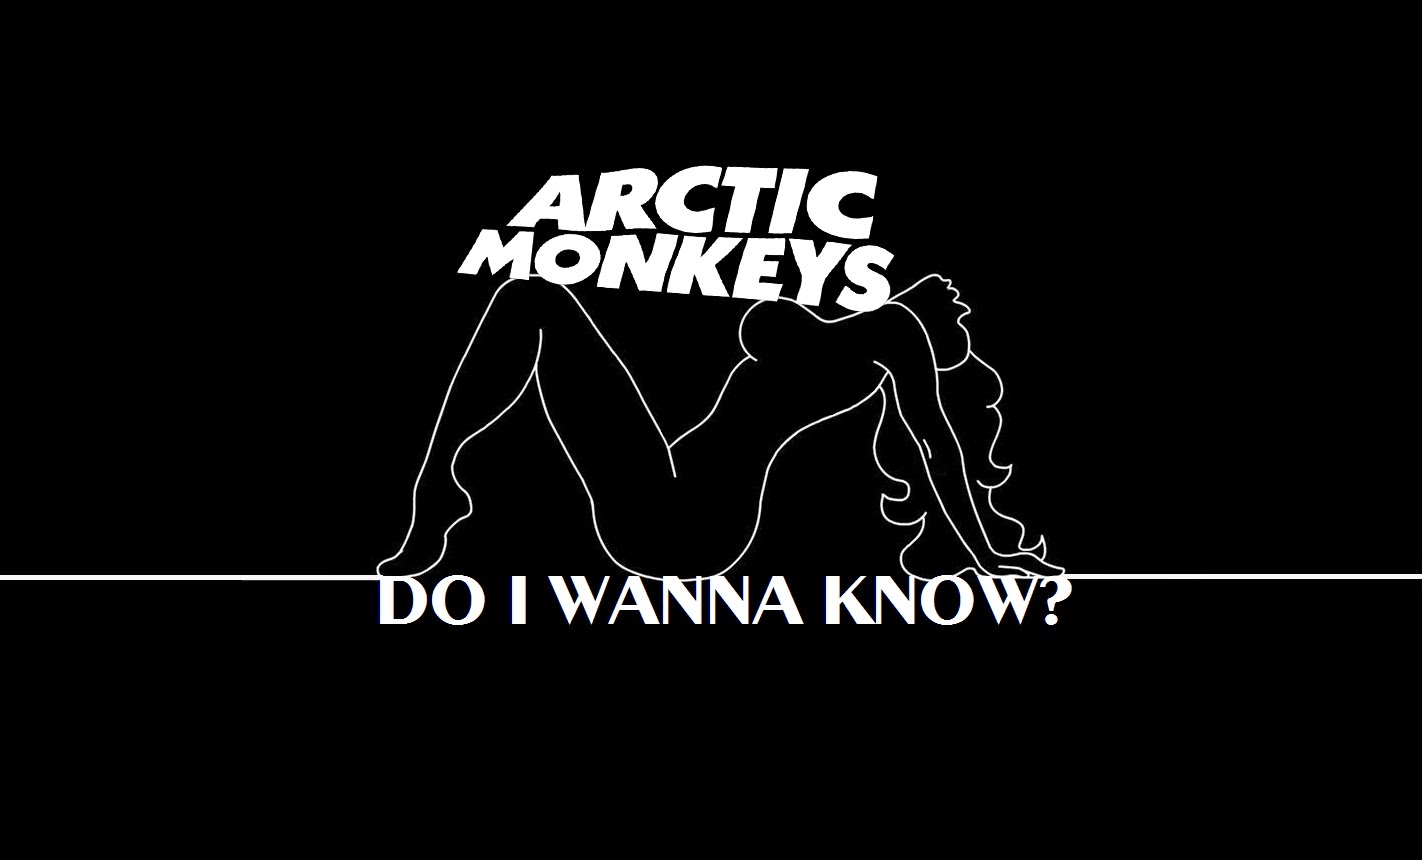 Arctic monkeys album download mp3 music